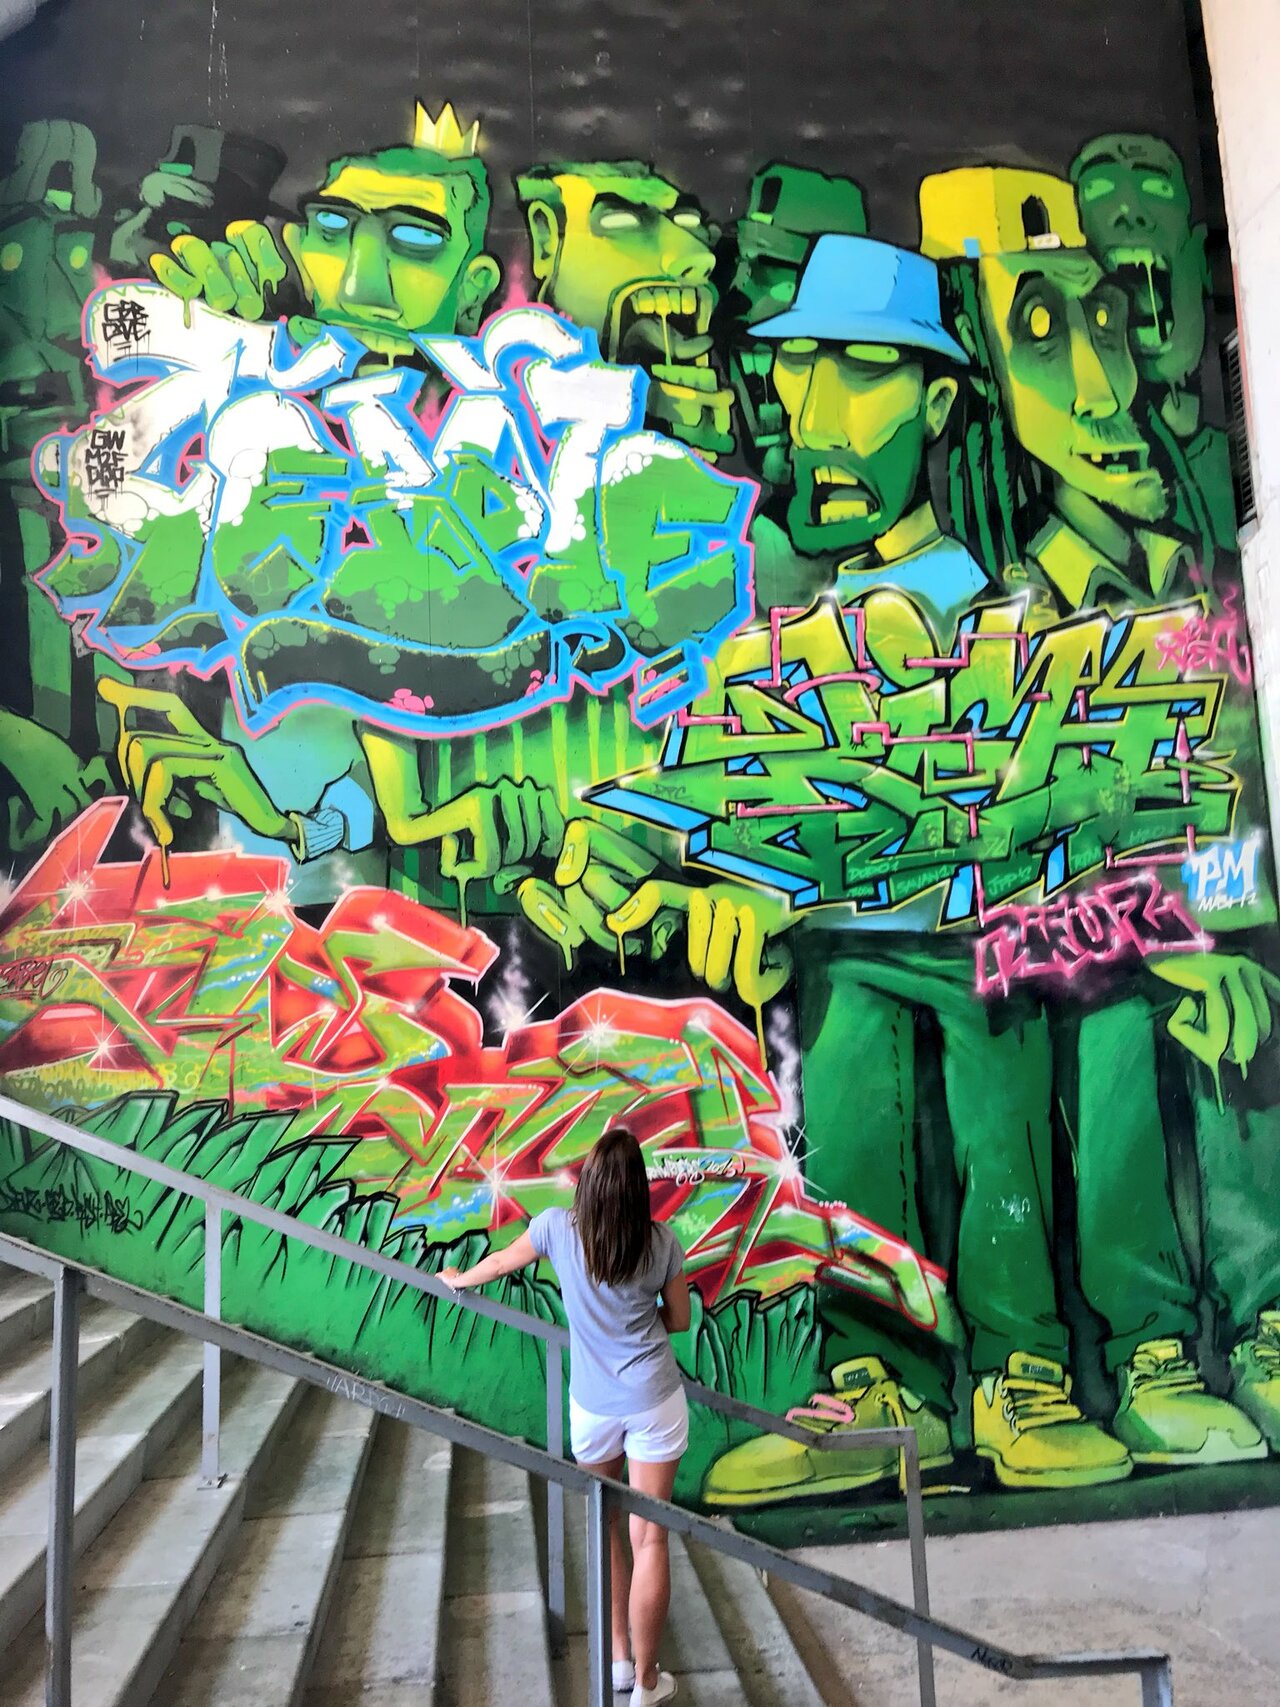 Street art at work #streetart #graffiti #marseille #atwork #caseworker #socialwork https://t.co/1Aub3Ps8ne